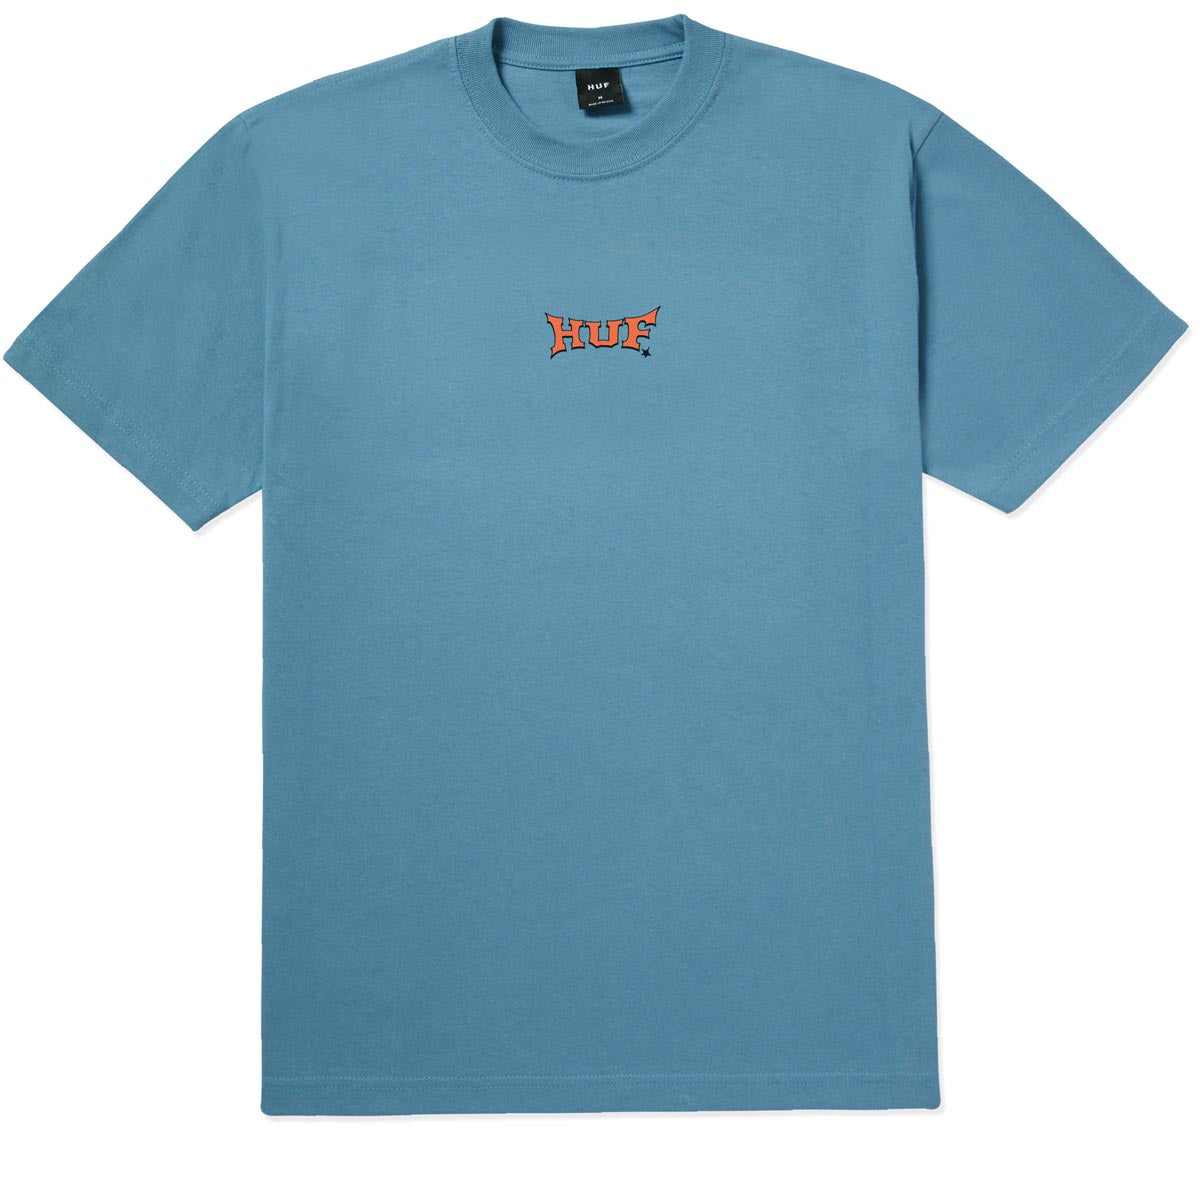 HUF Sassy H T-Shirt - Slate Blue image 2